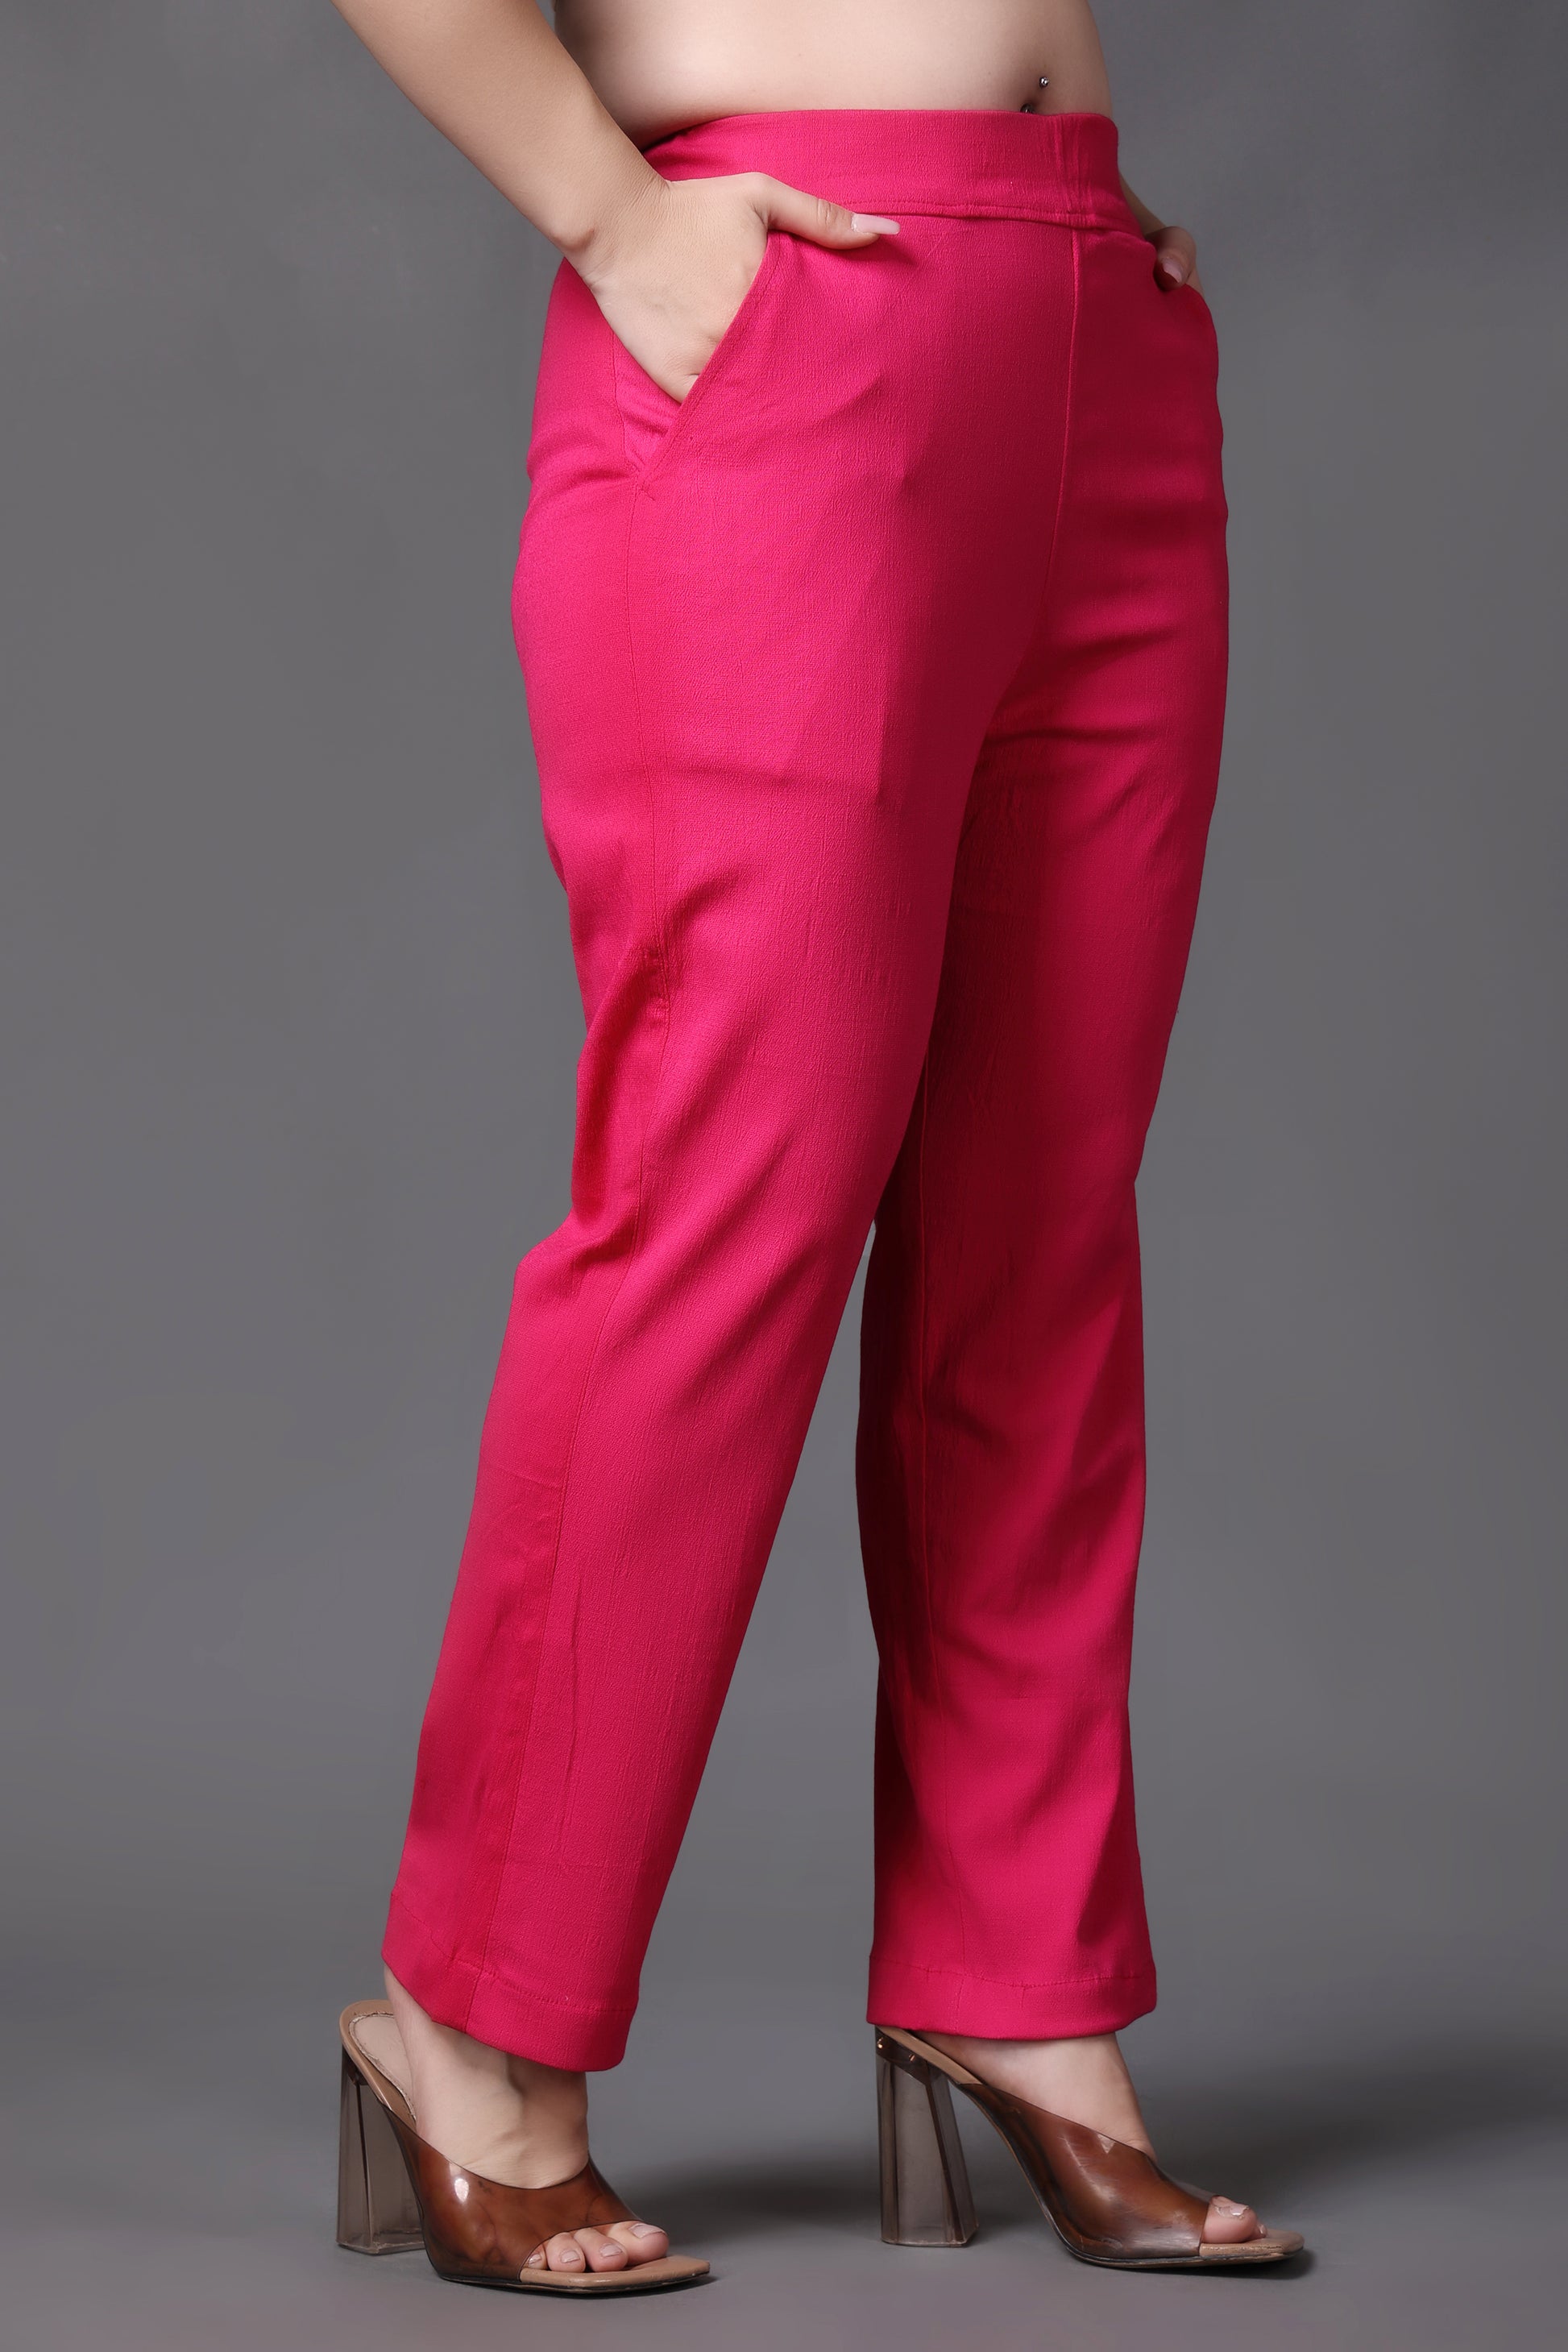 Buy Plus Size Formal Pants & Plus Size Stretchable Pants - Apella